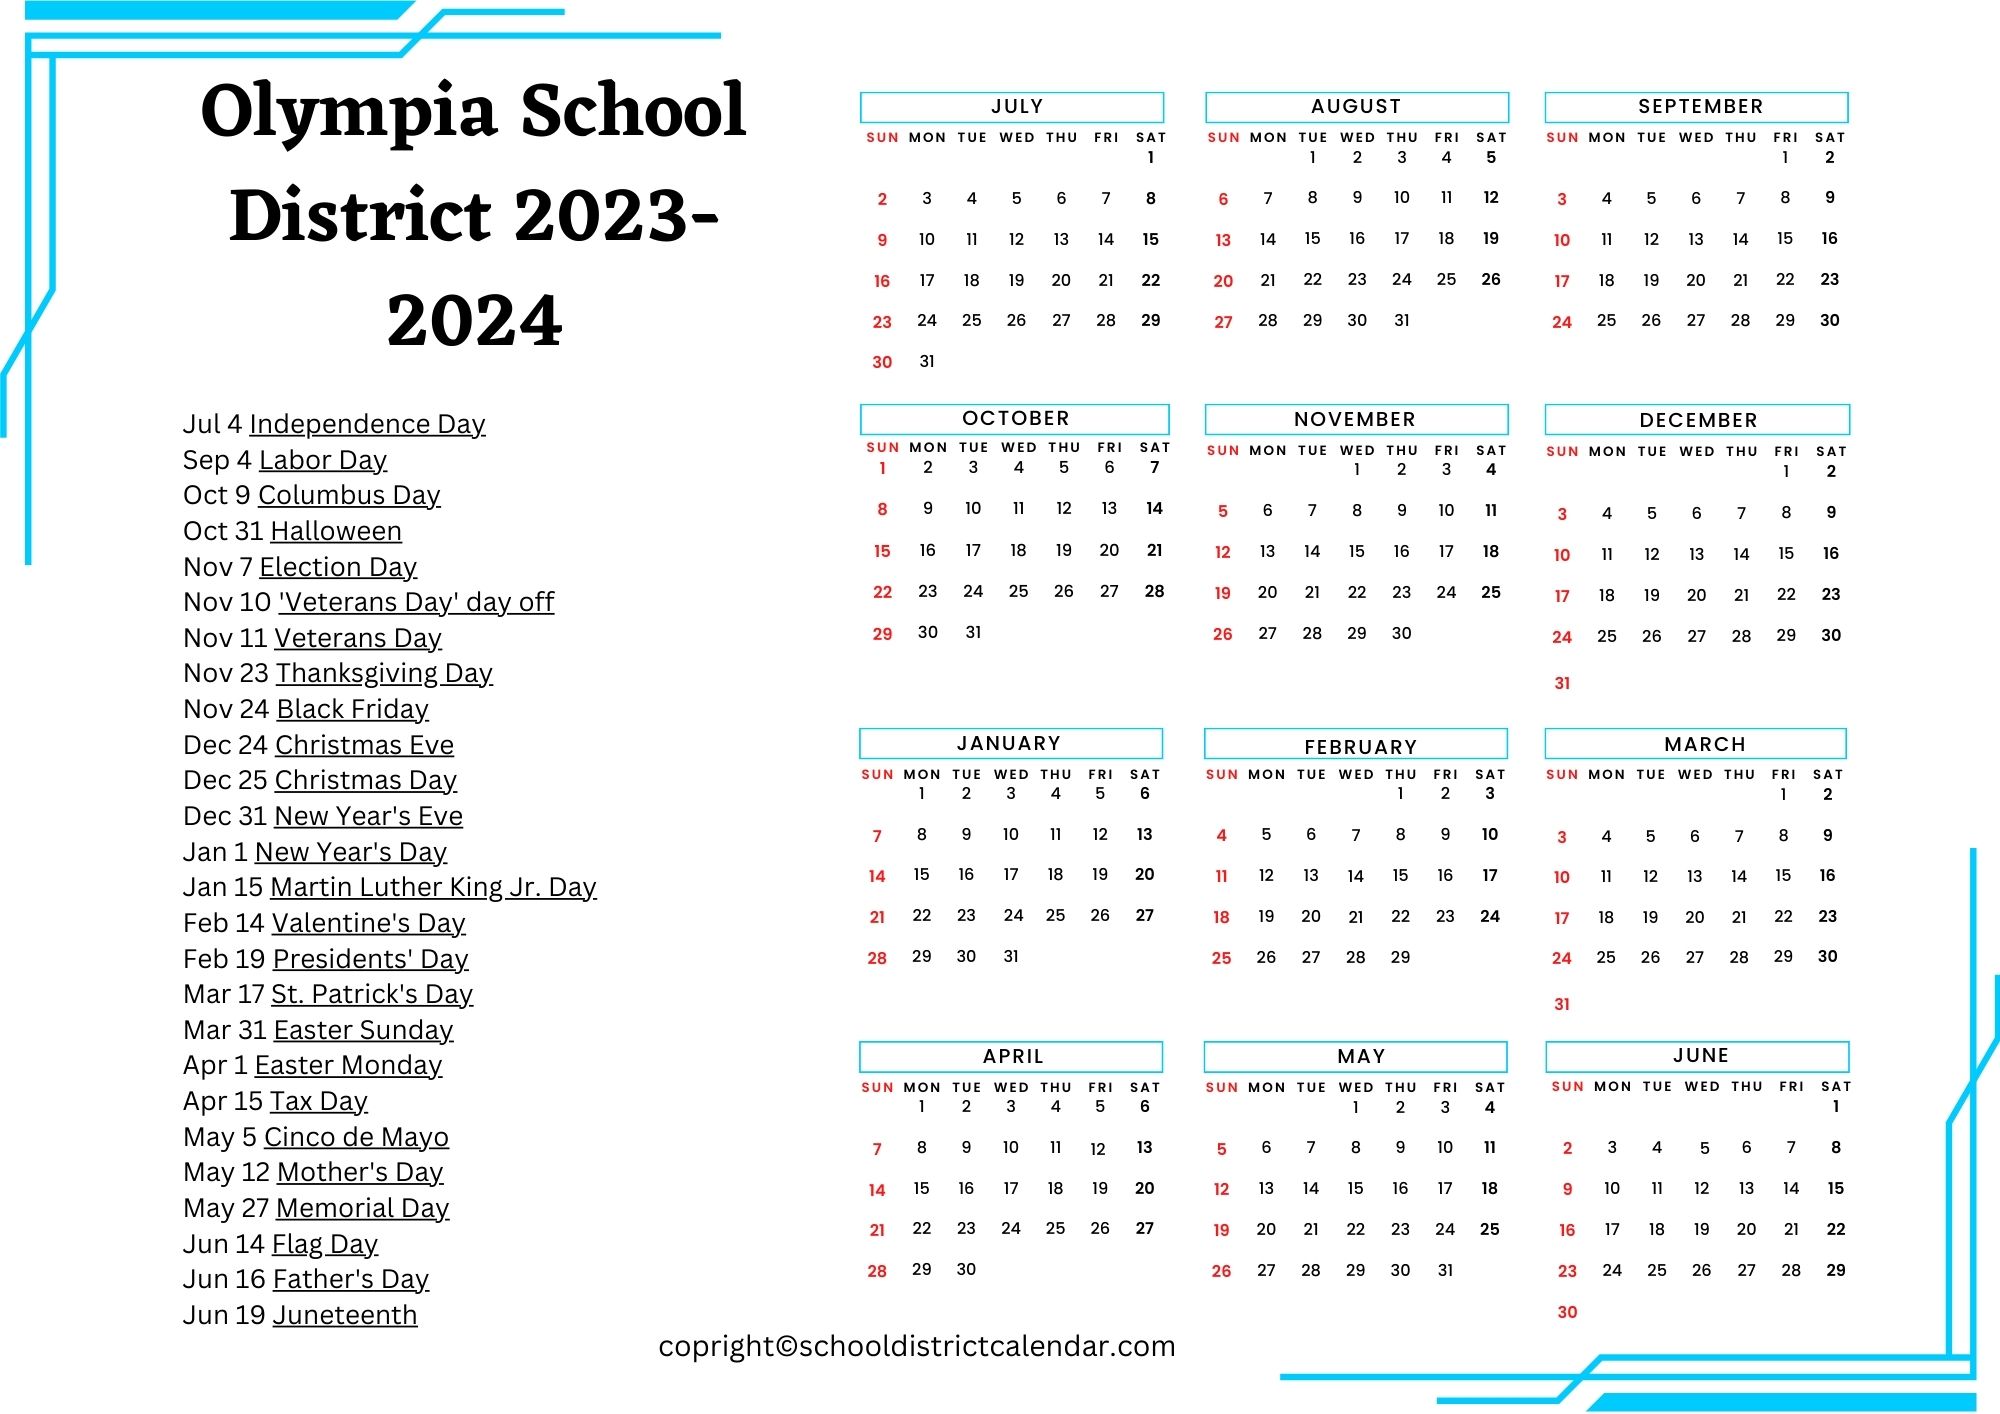 Olympia School District Calendar Holidays 2023-2024